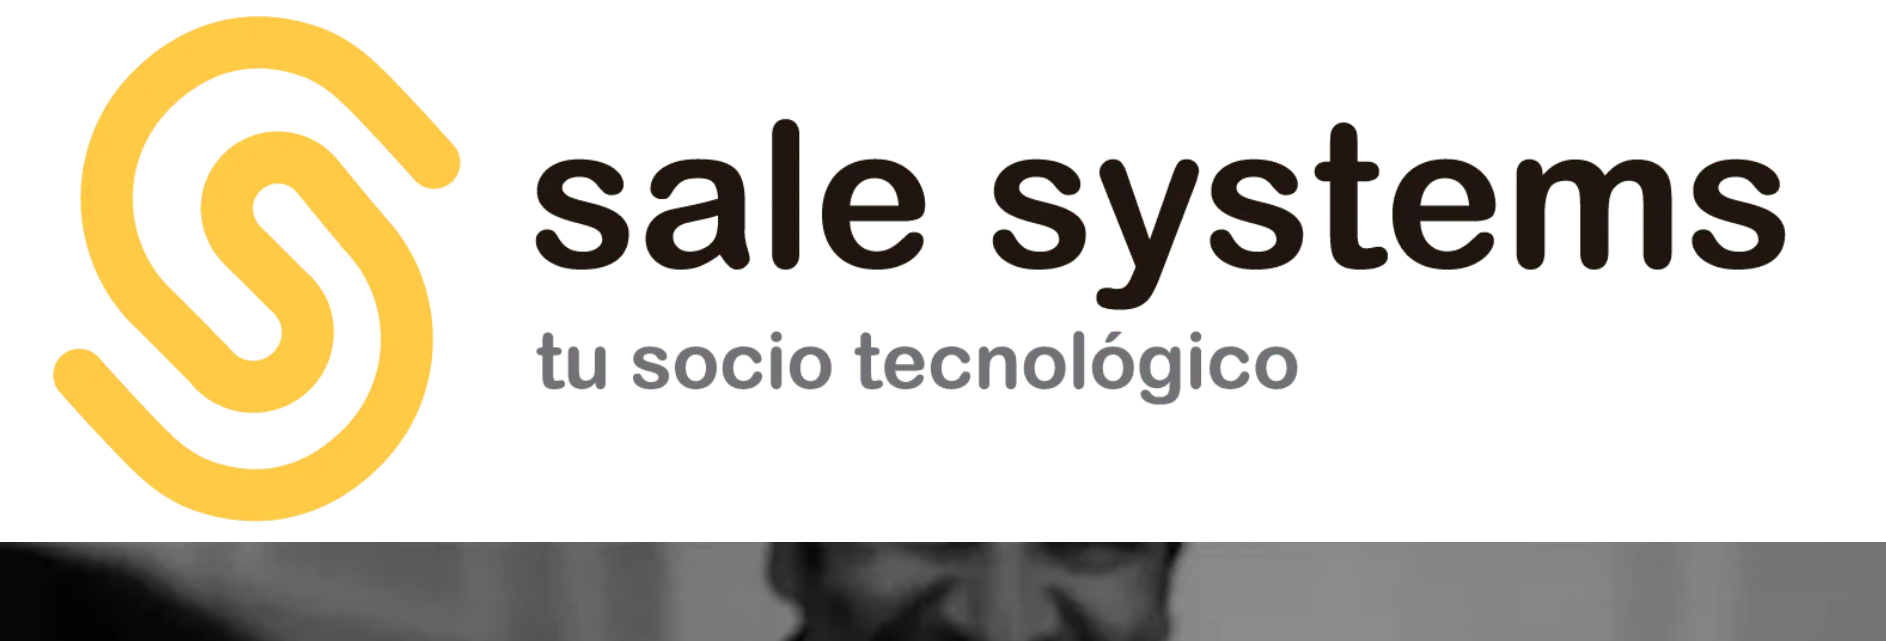 sale systems web